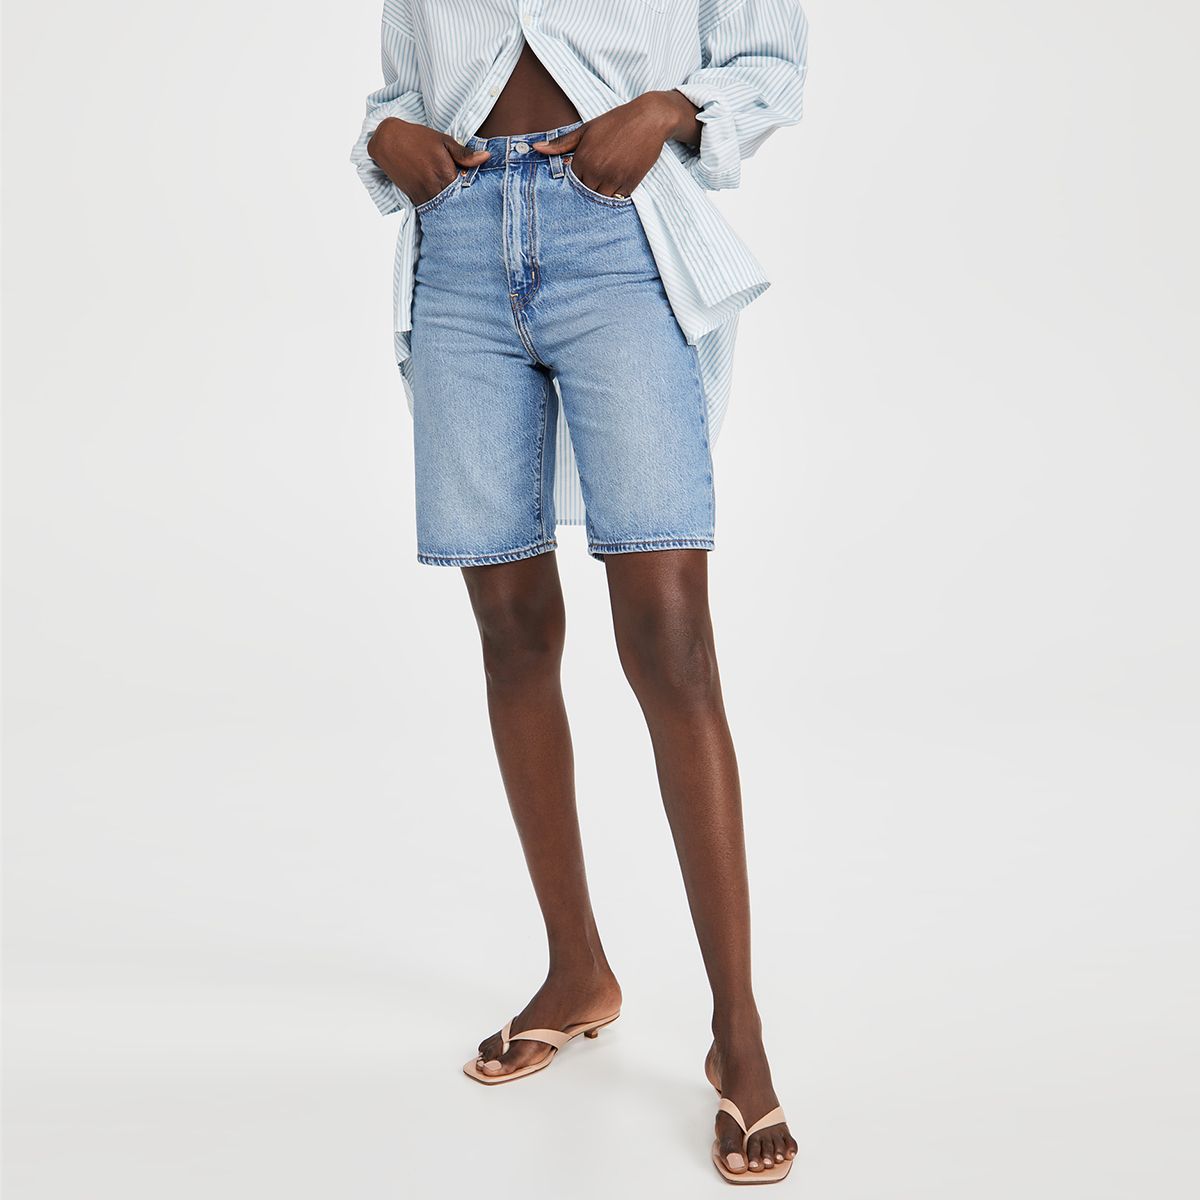 8 Summer Wardrobe Basics NYC Girls Love | Who What Wear